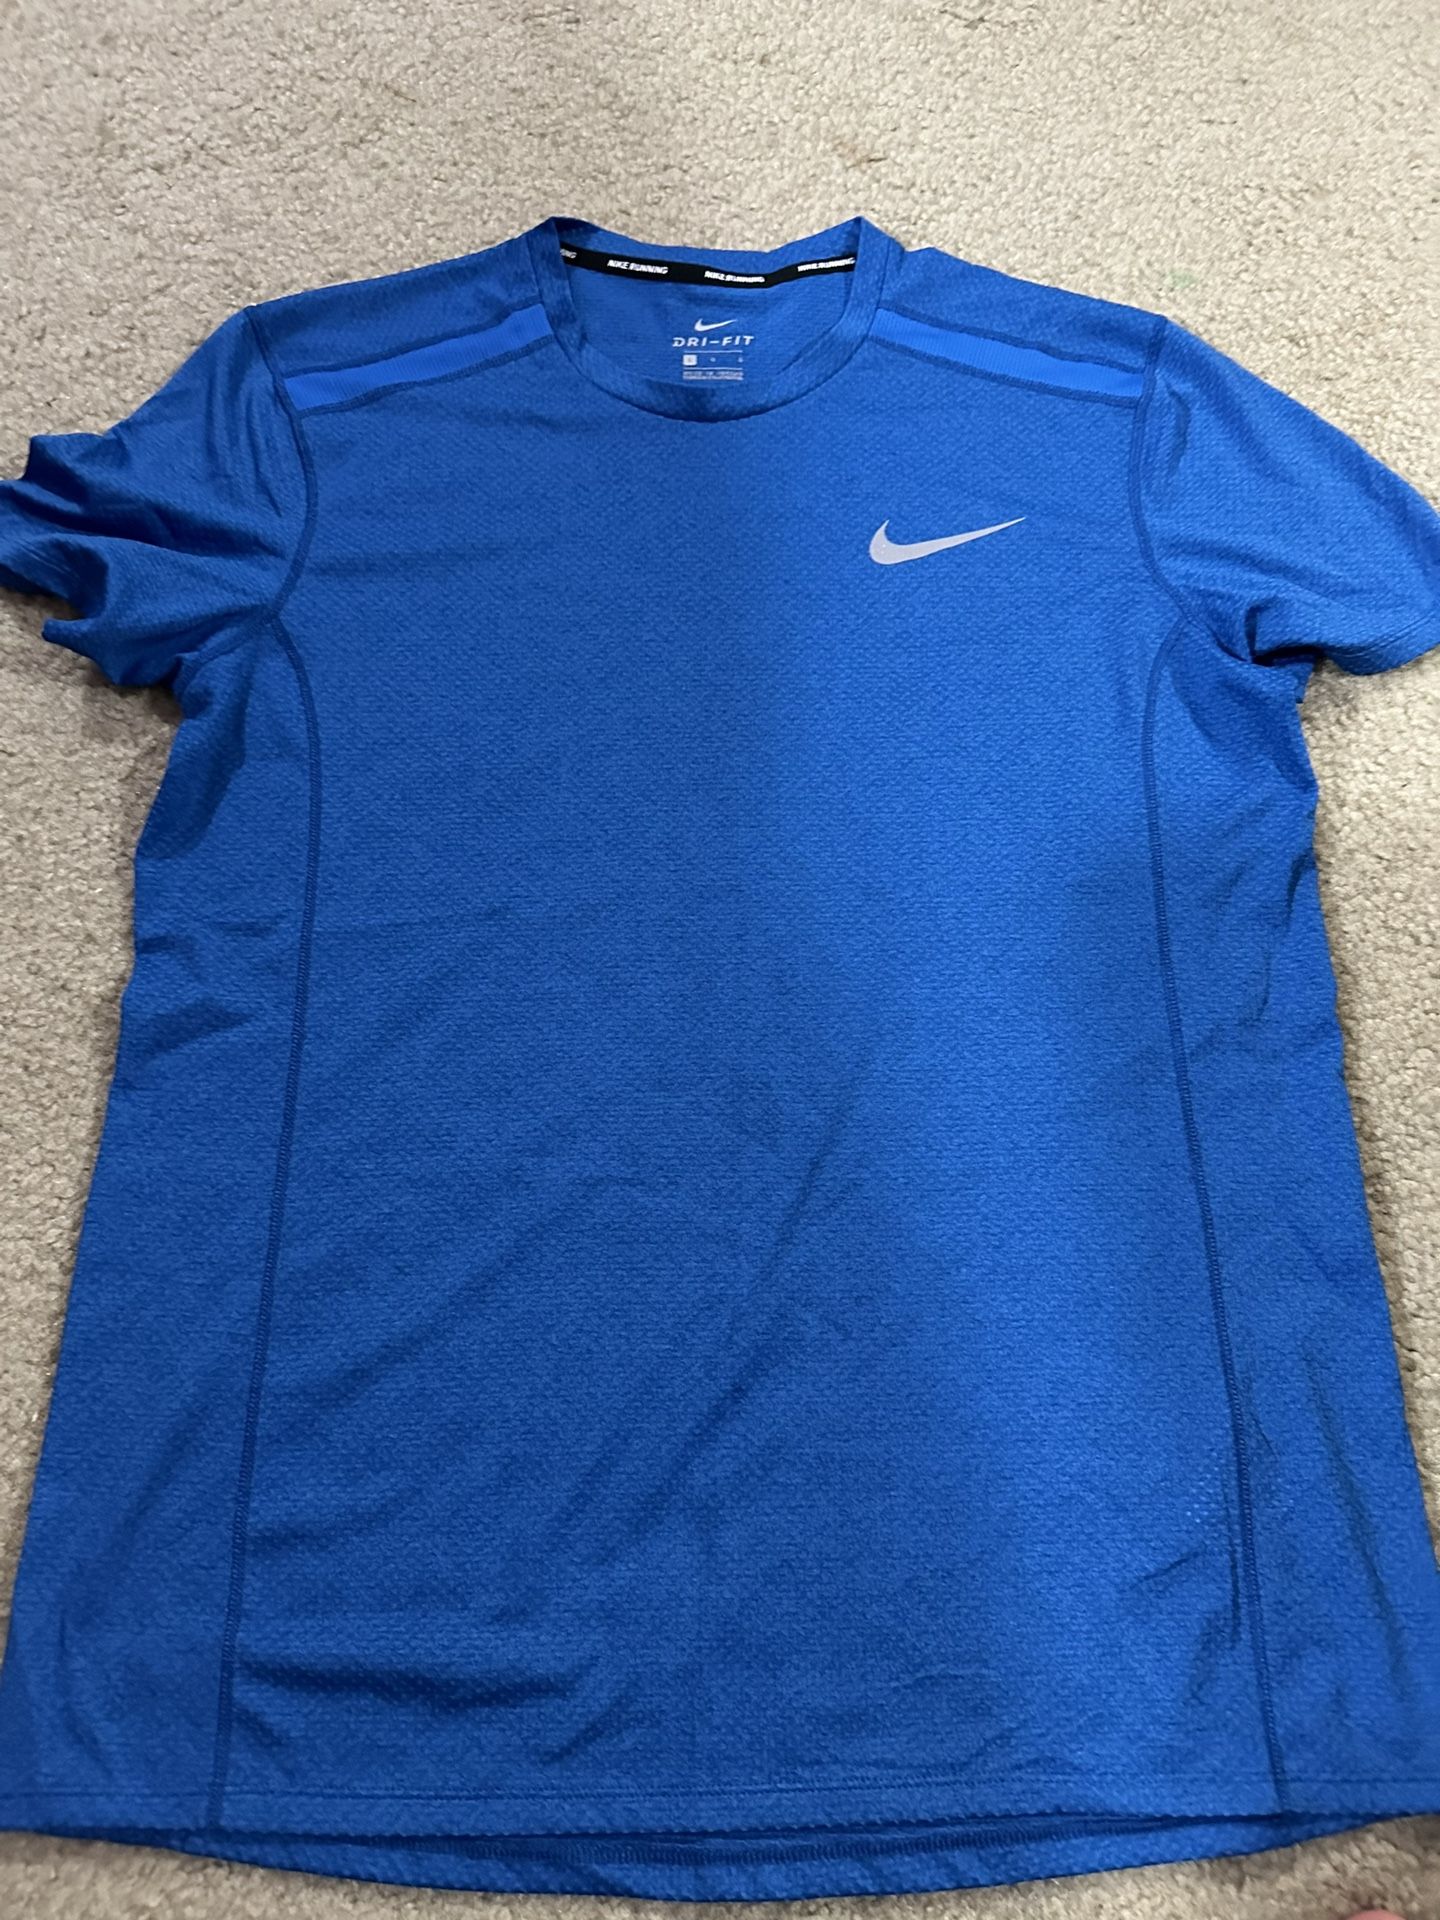 Men’s Nike T-Shirt